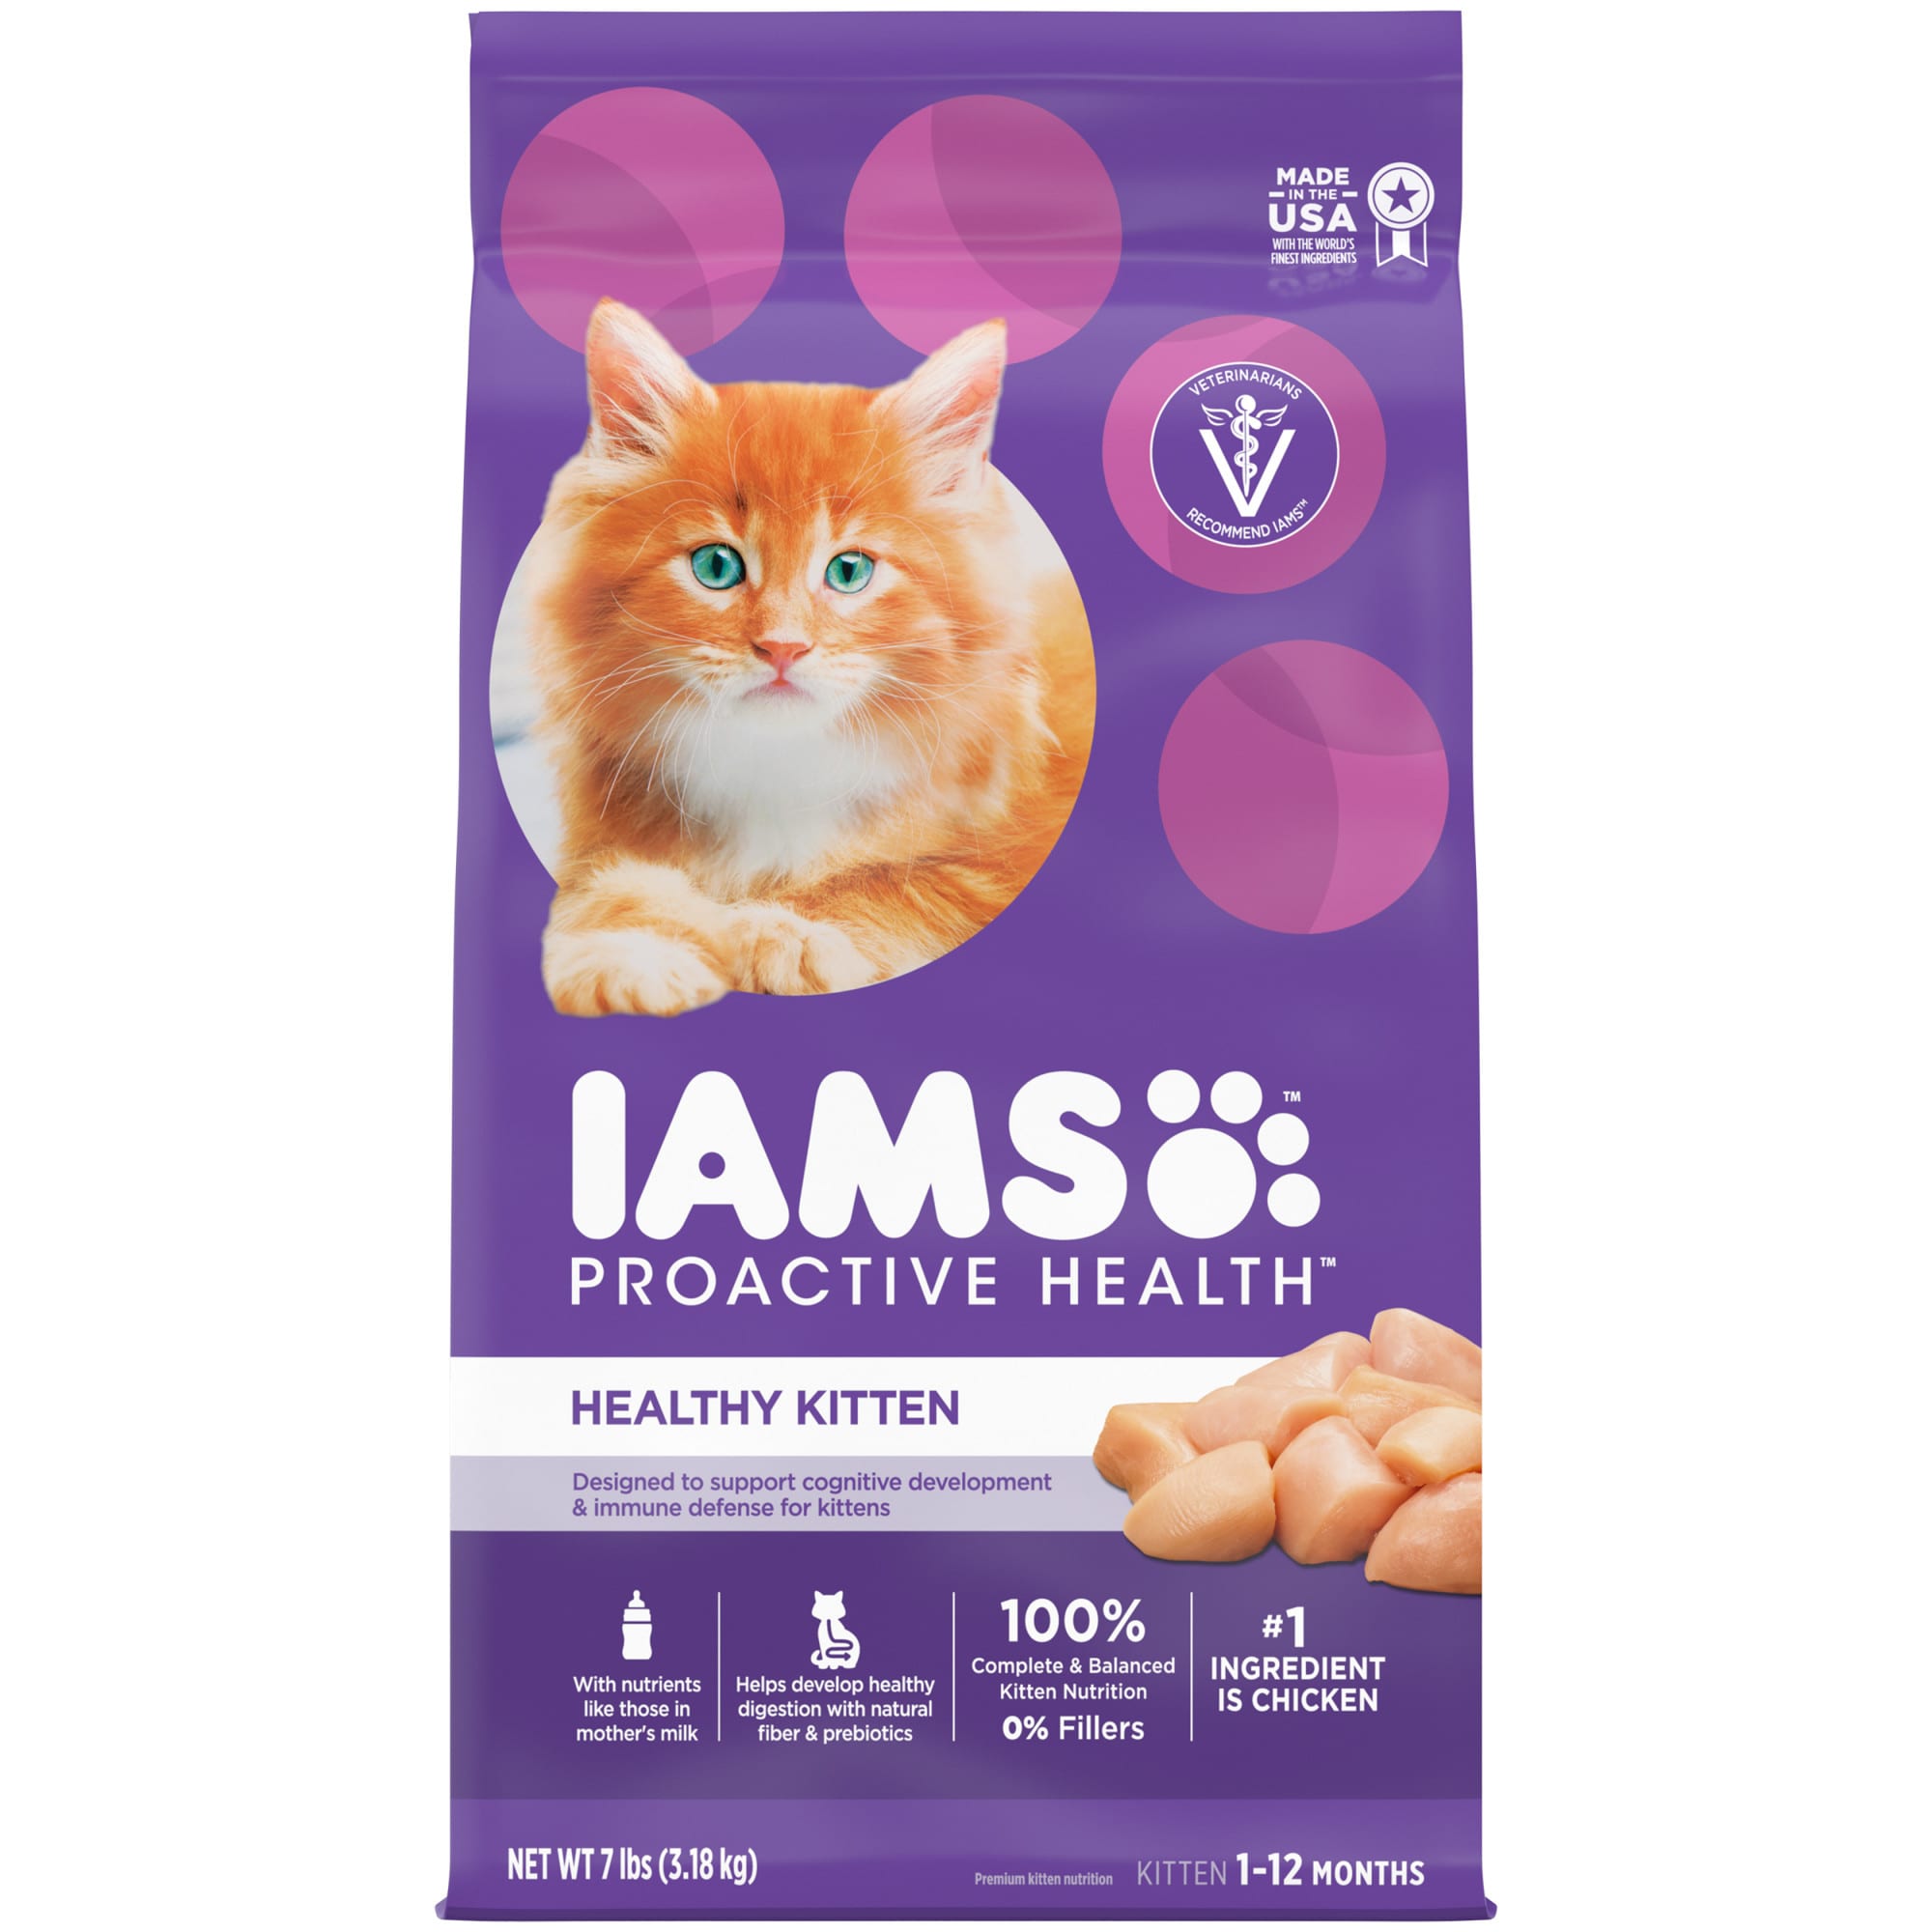 iams wet cat food